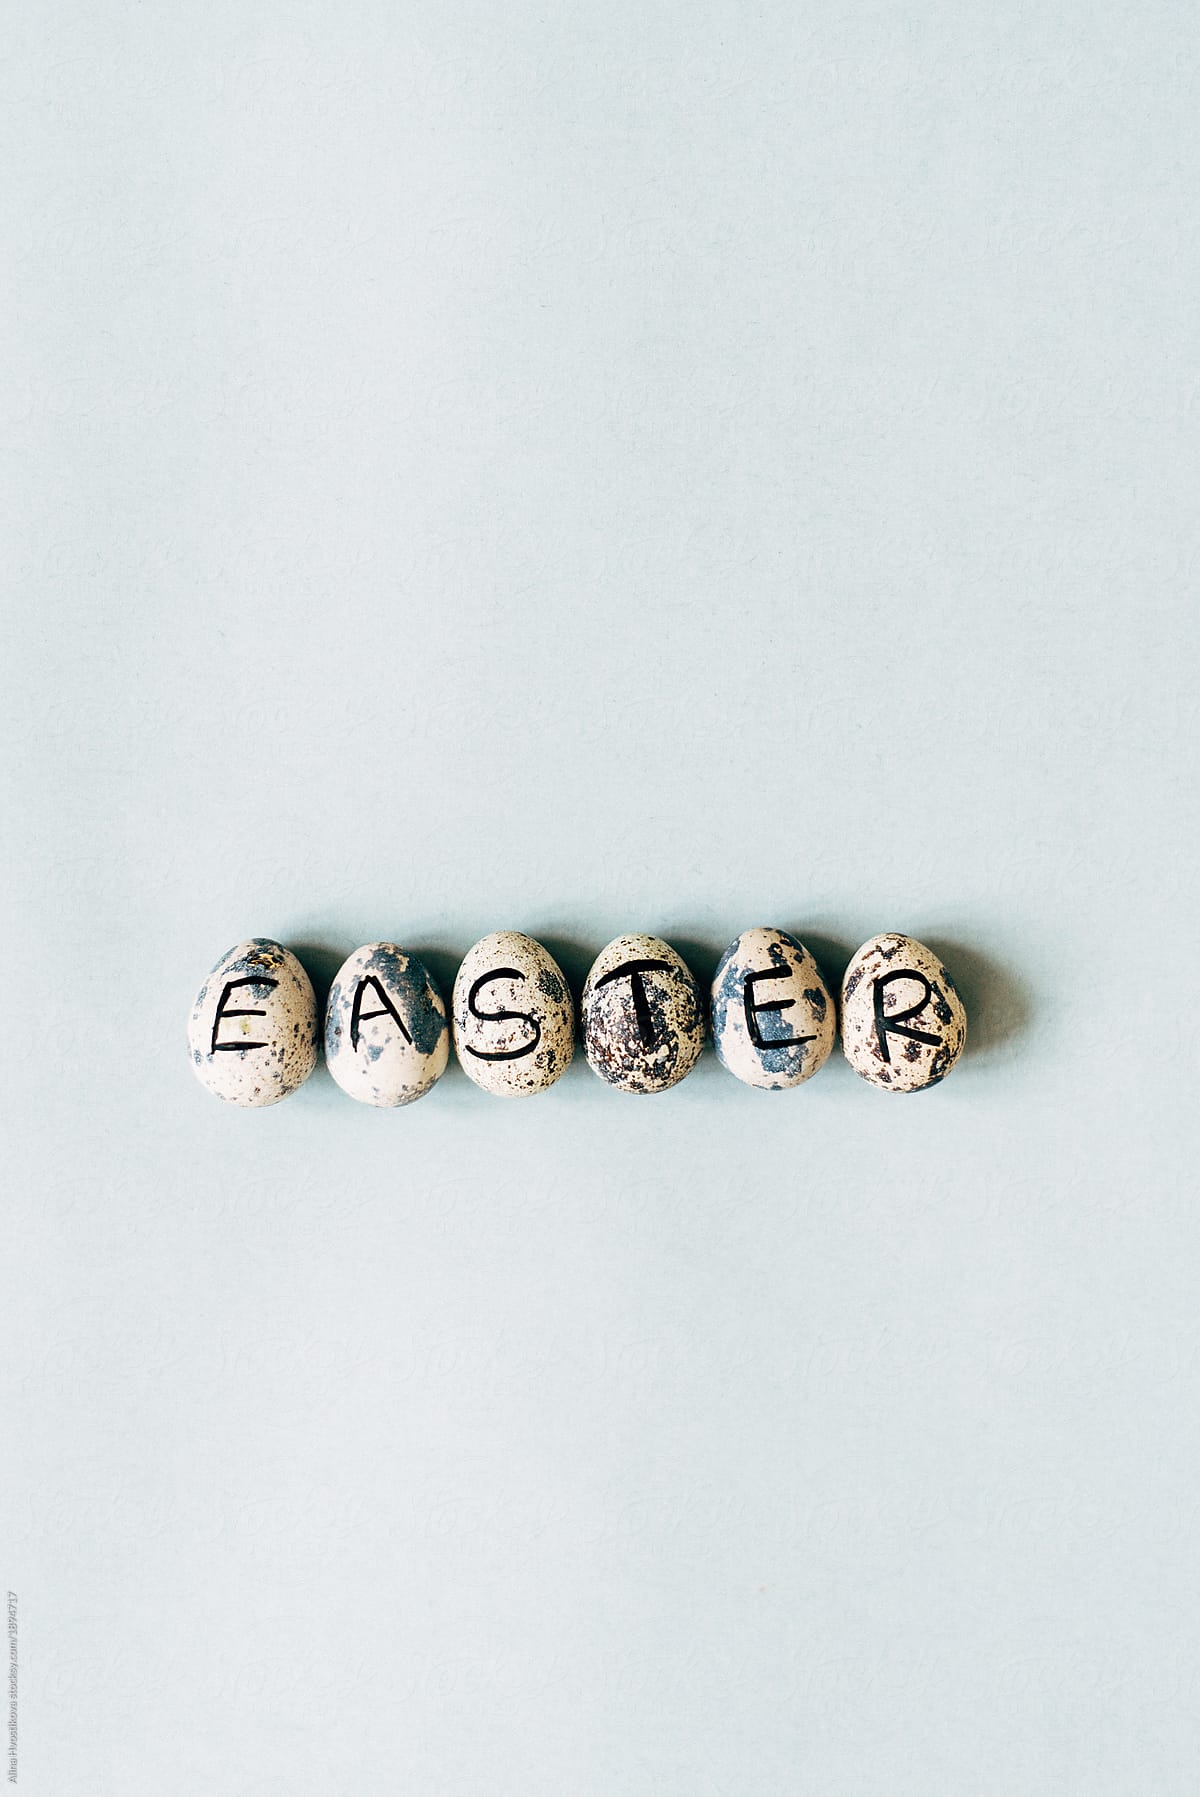 Happy Easter on quail eggs